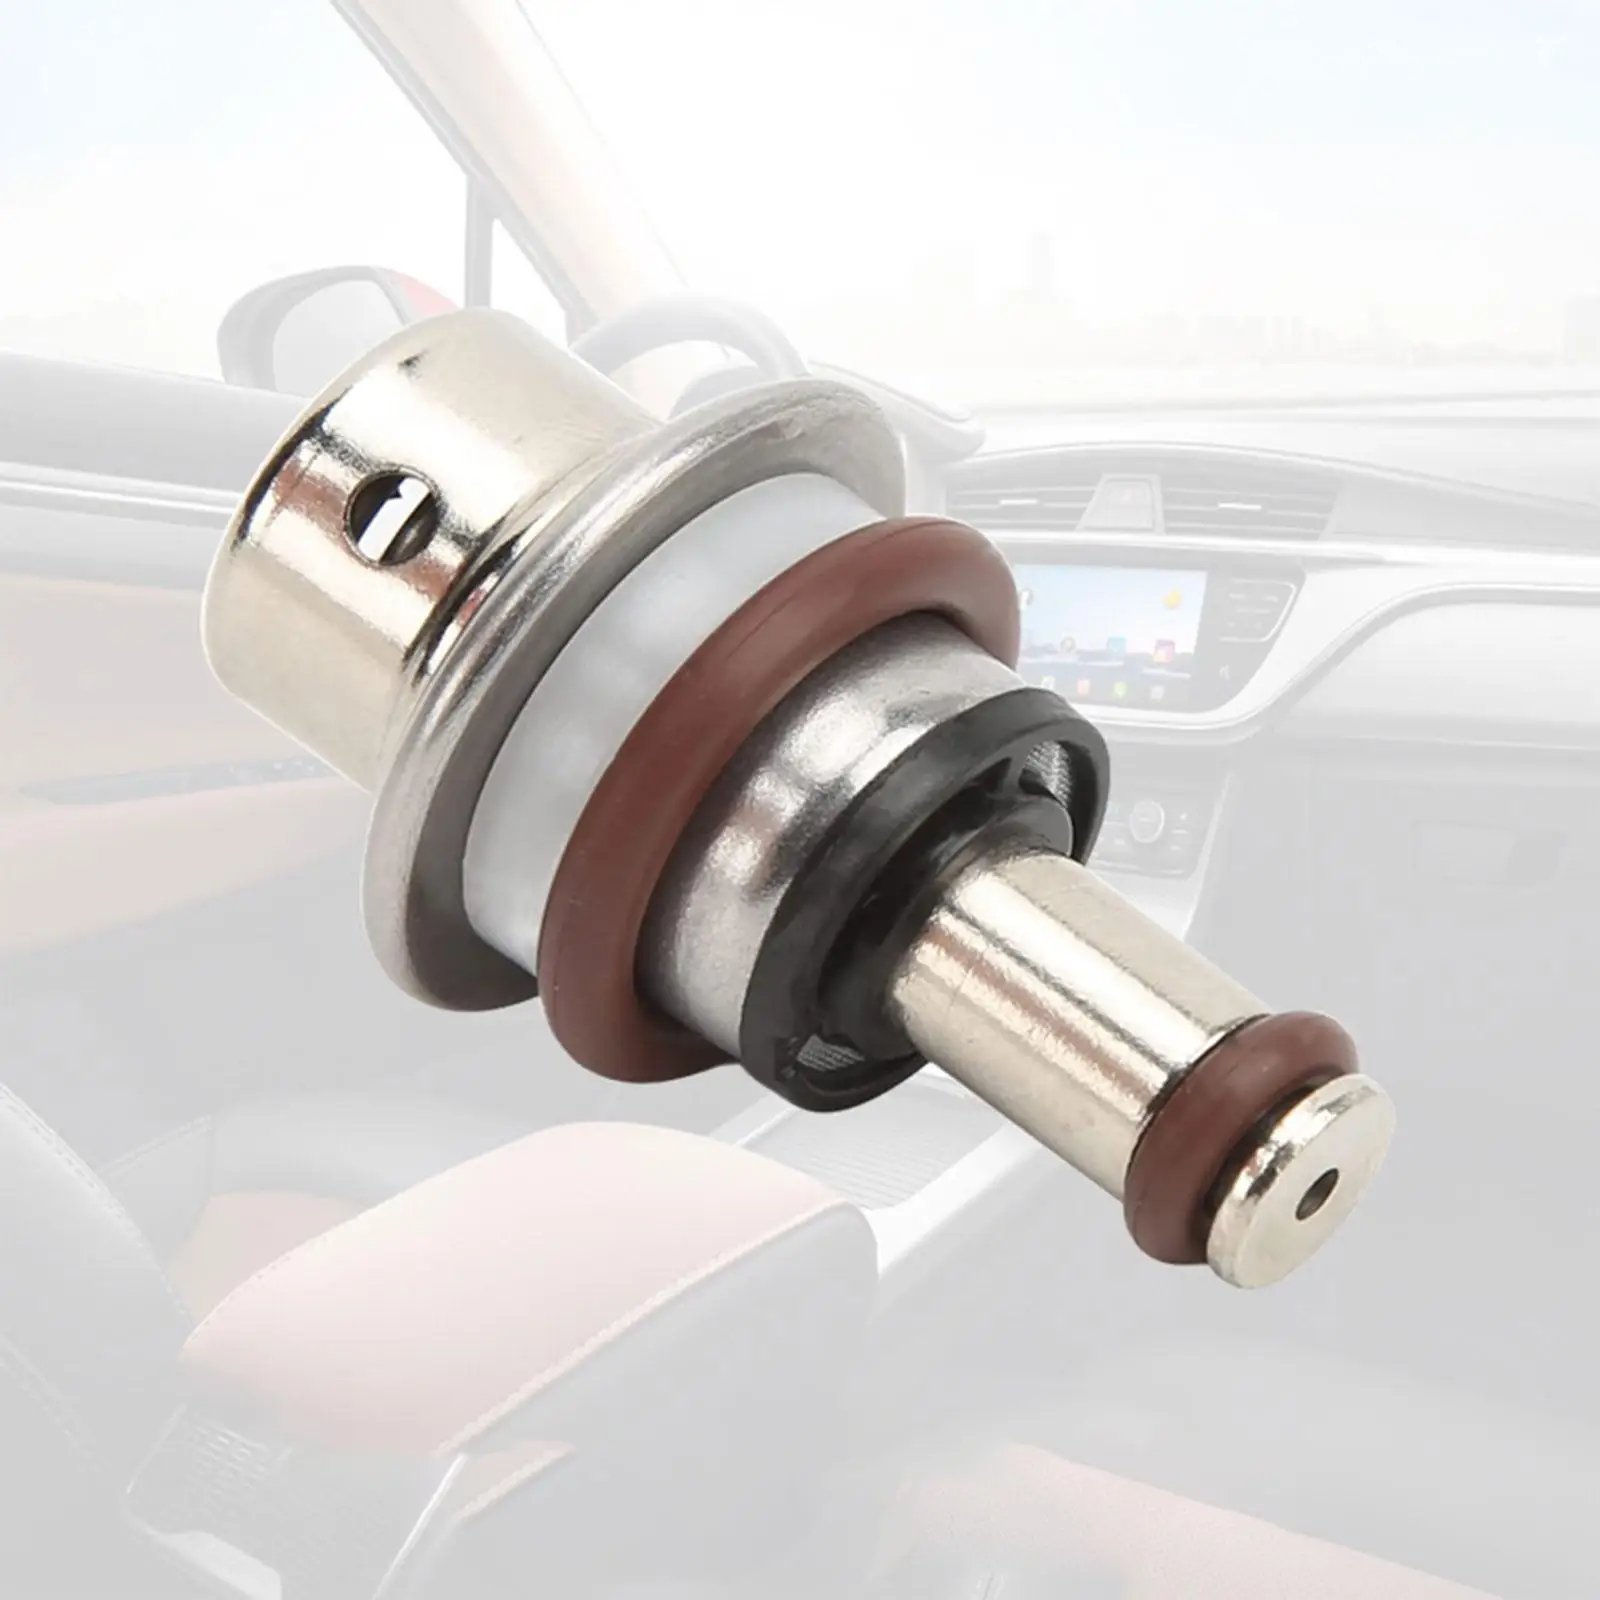 Fuel Pressure Regulator Valve Car Accessories for Toyota for prius for rav4